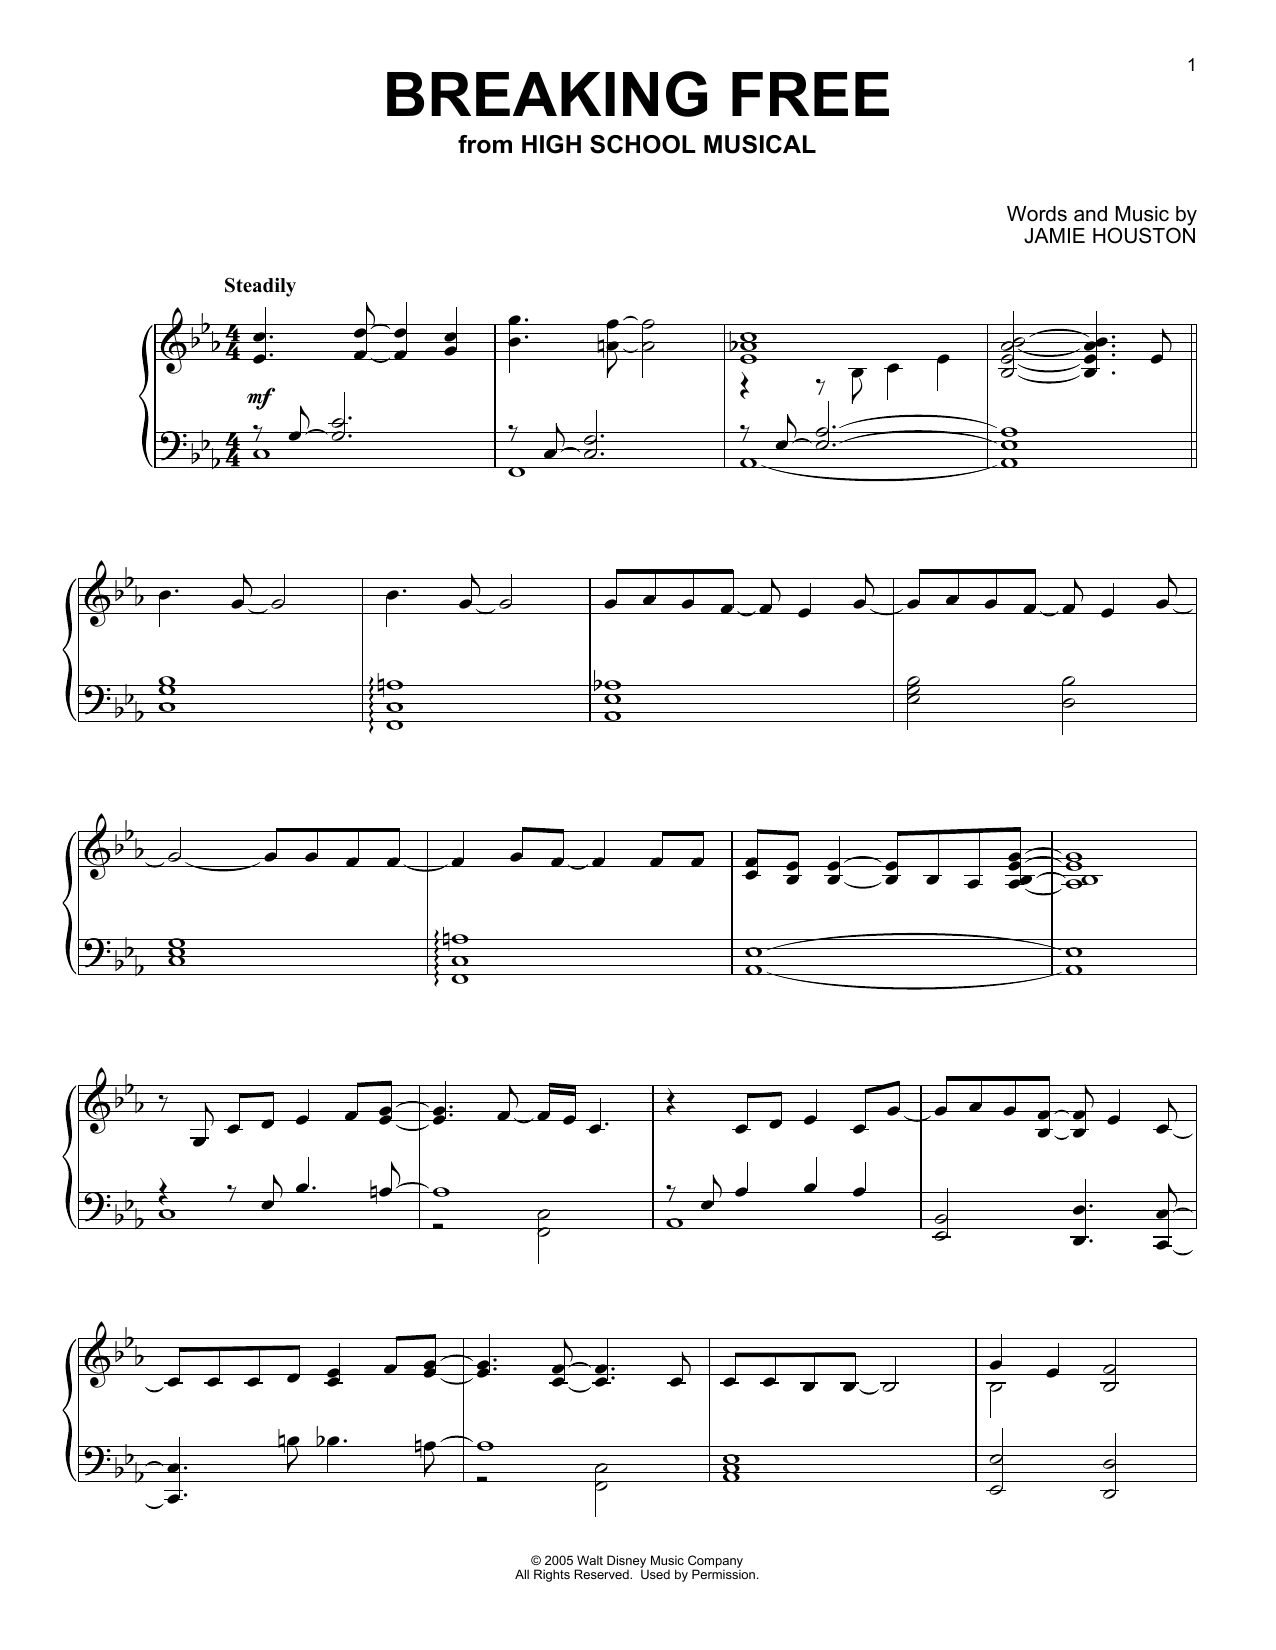 Download Zac Efron & Vanessa Hudgens Breaking Free (from High School Musical Sheet Music